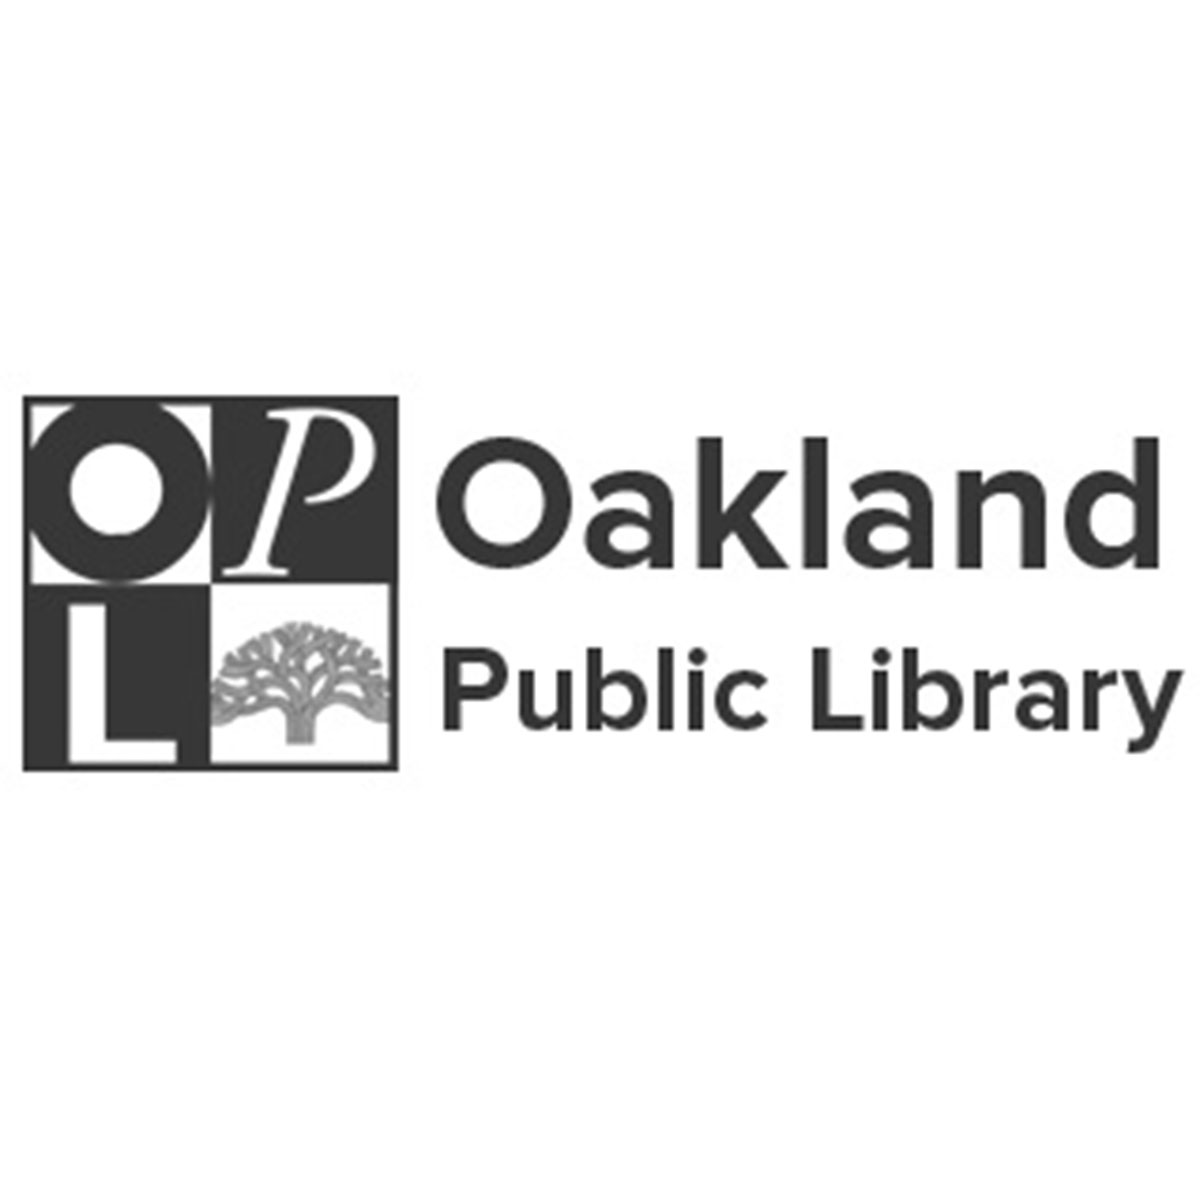 Oakland Public Library Logo